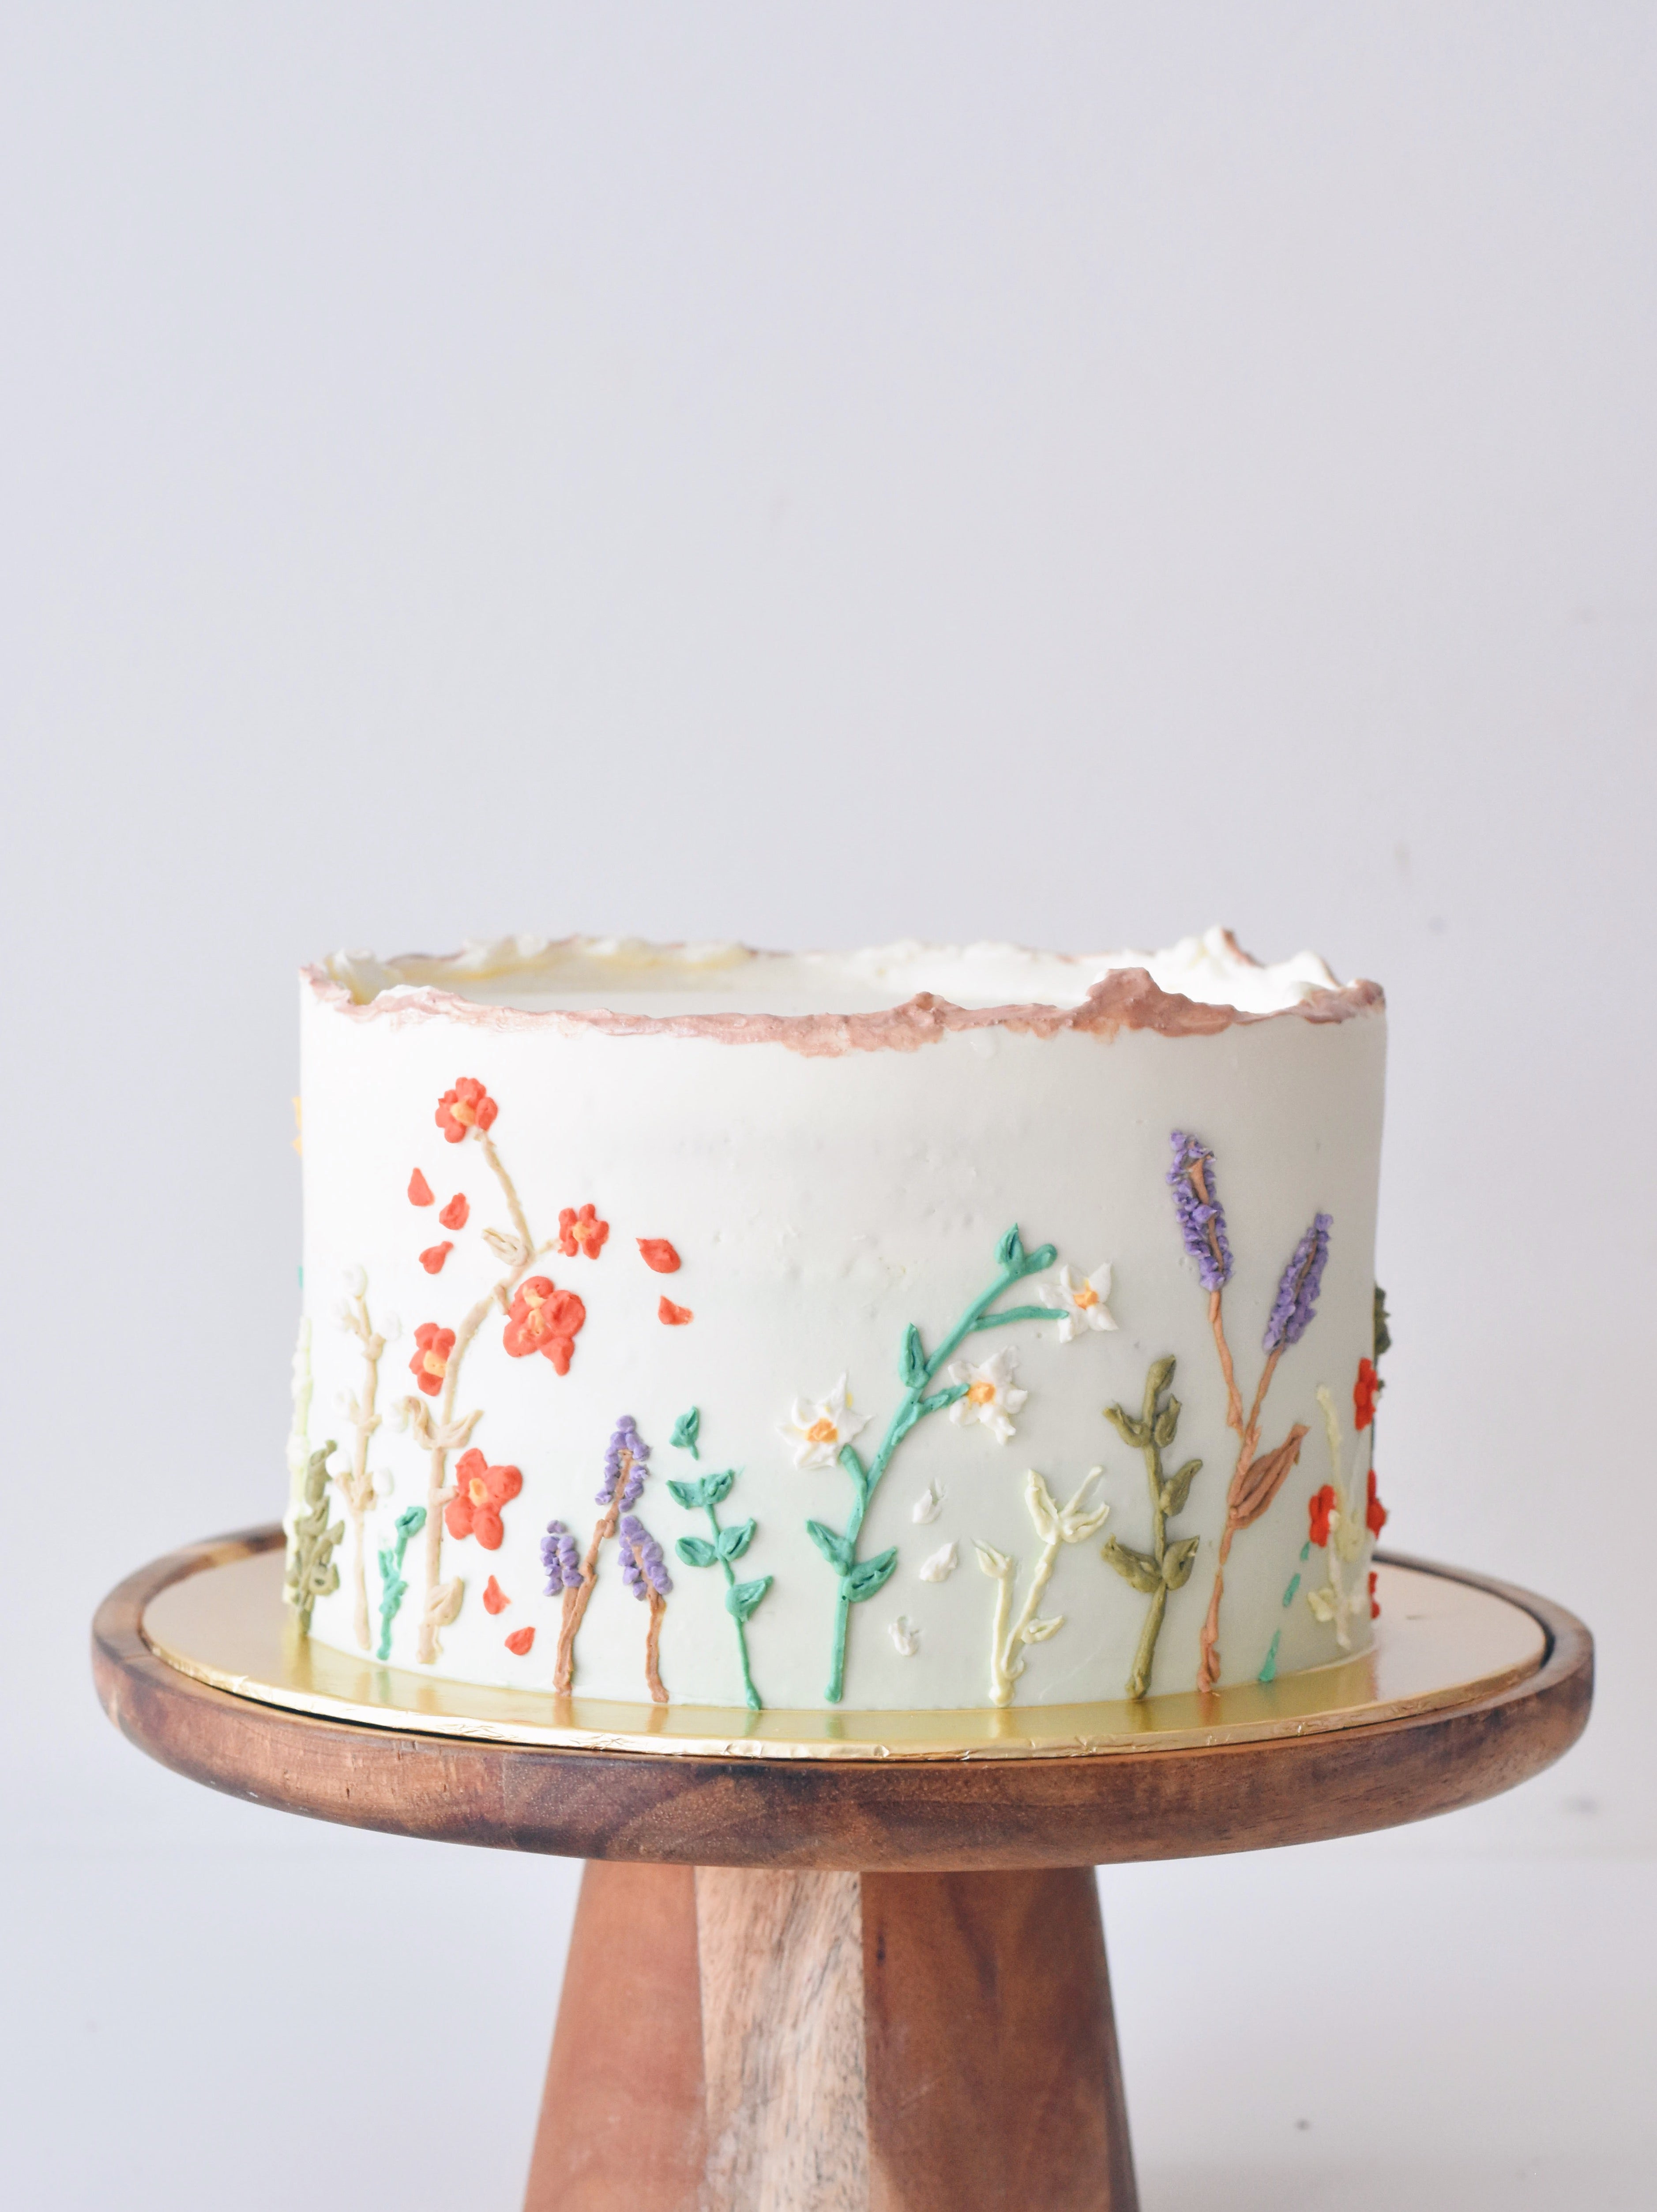 In The Night Garden Birthday Cake - Mel's Amazing Cakes